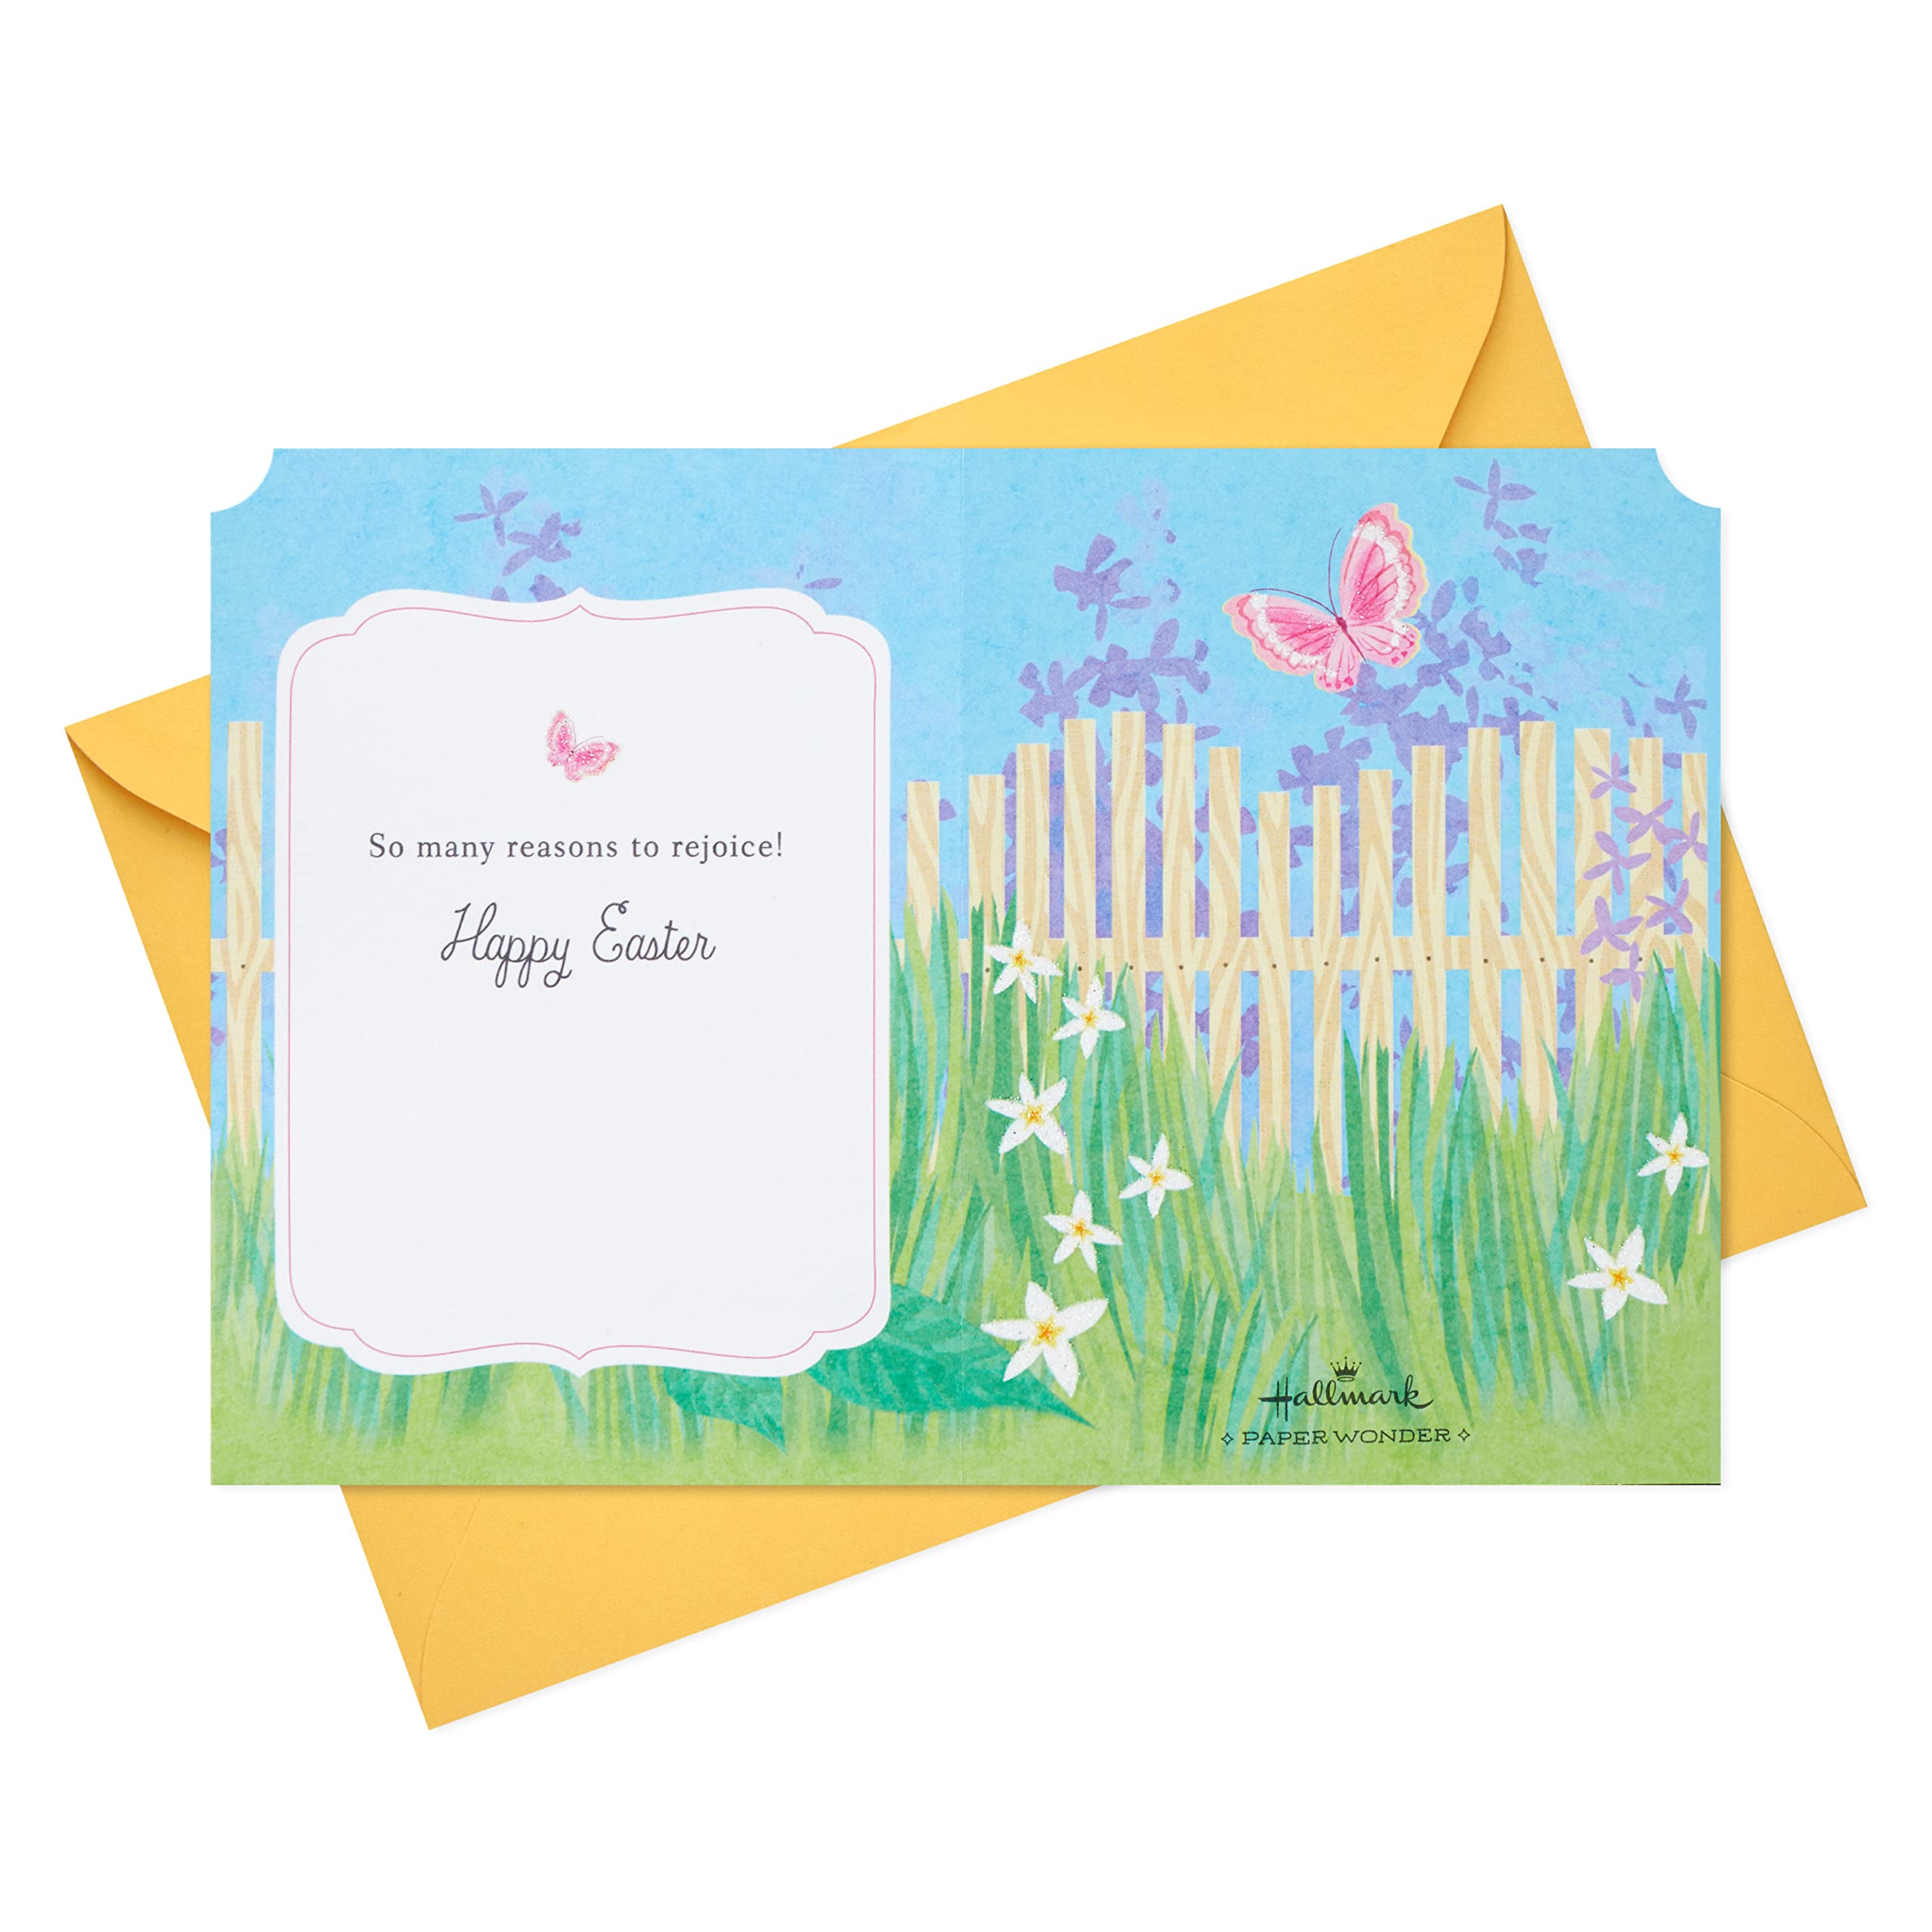 Hallmark Paper Wonder Displayable Pop Up Easter Card (Lilies)